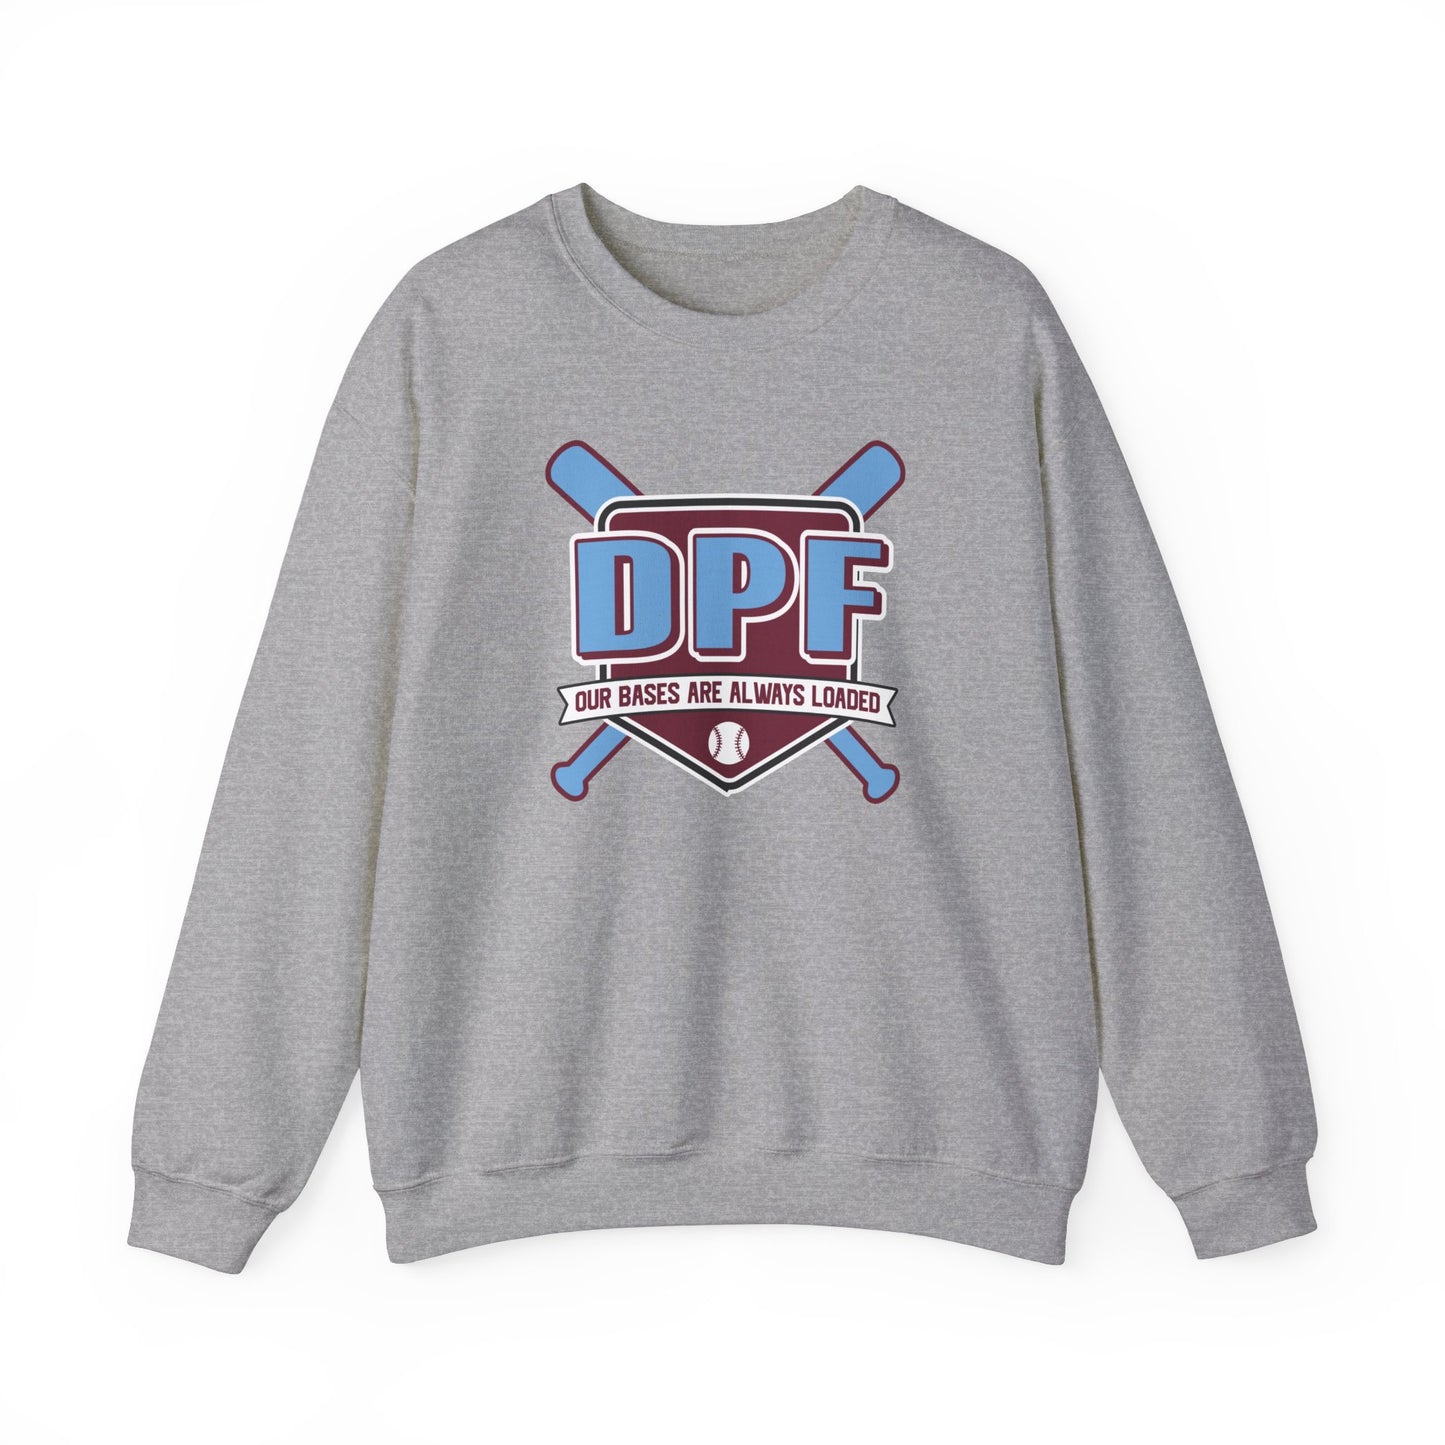 DPF Initials Crewneck Sweatshirt